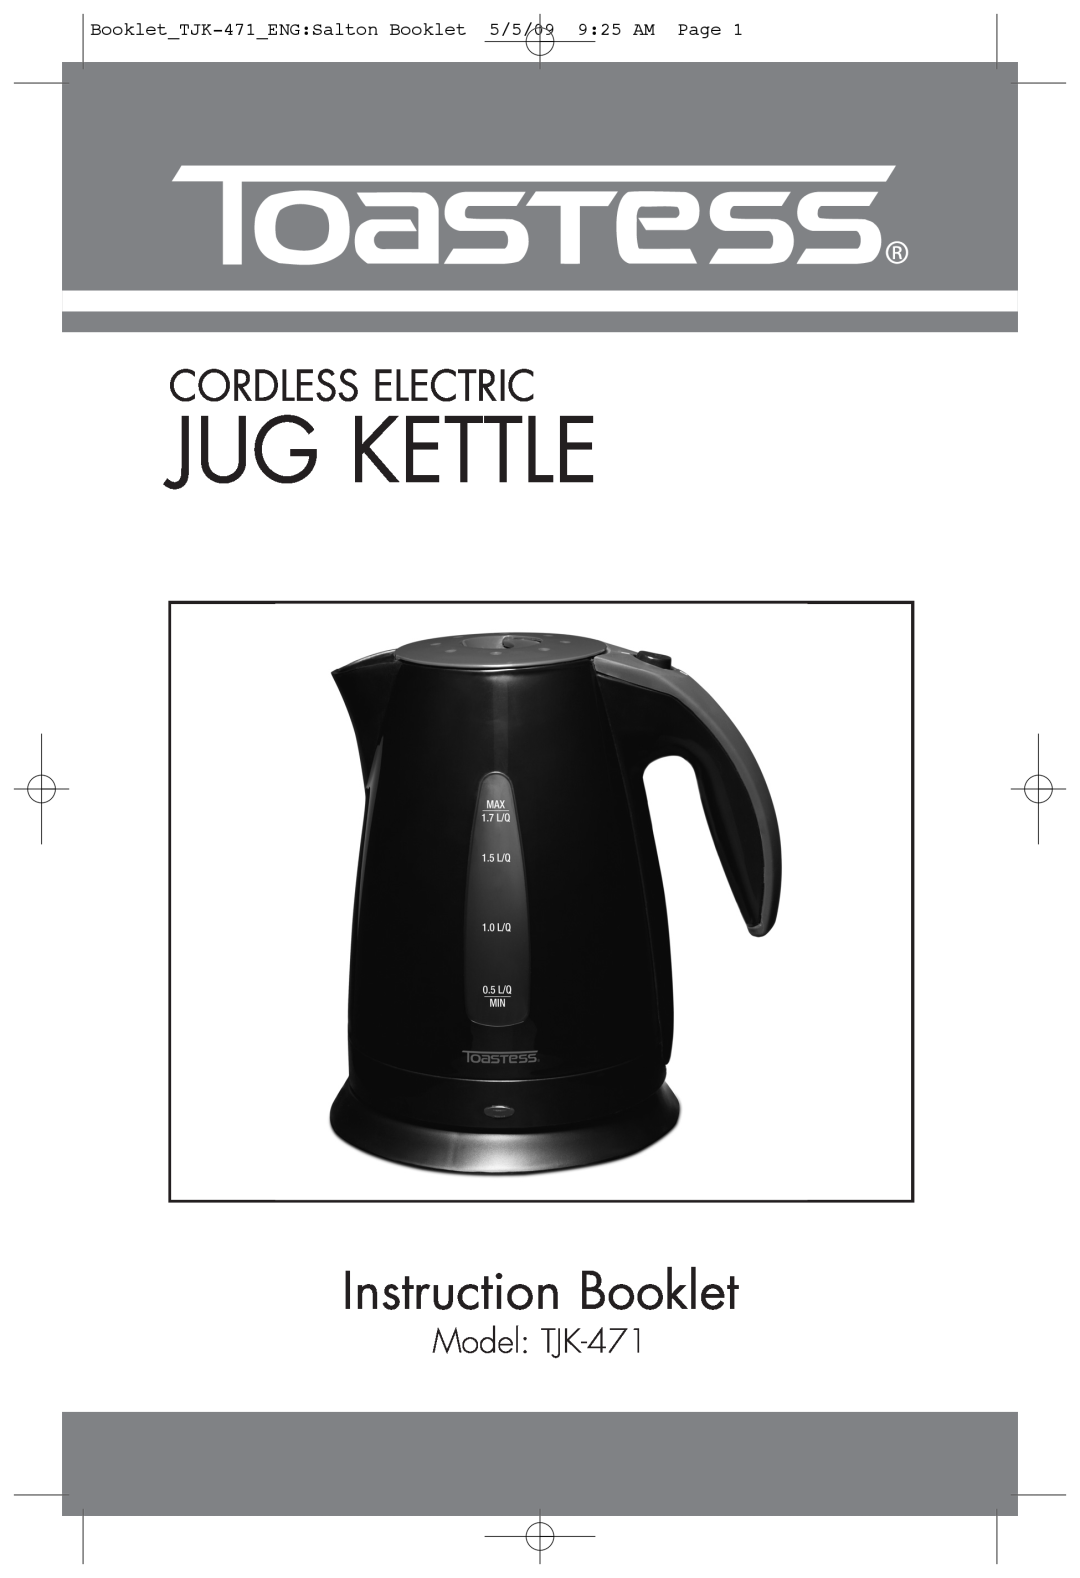 Toastess manual Jug Kettle, Instruction Booklet, Cordless Electric, Model TJK-471 